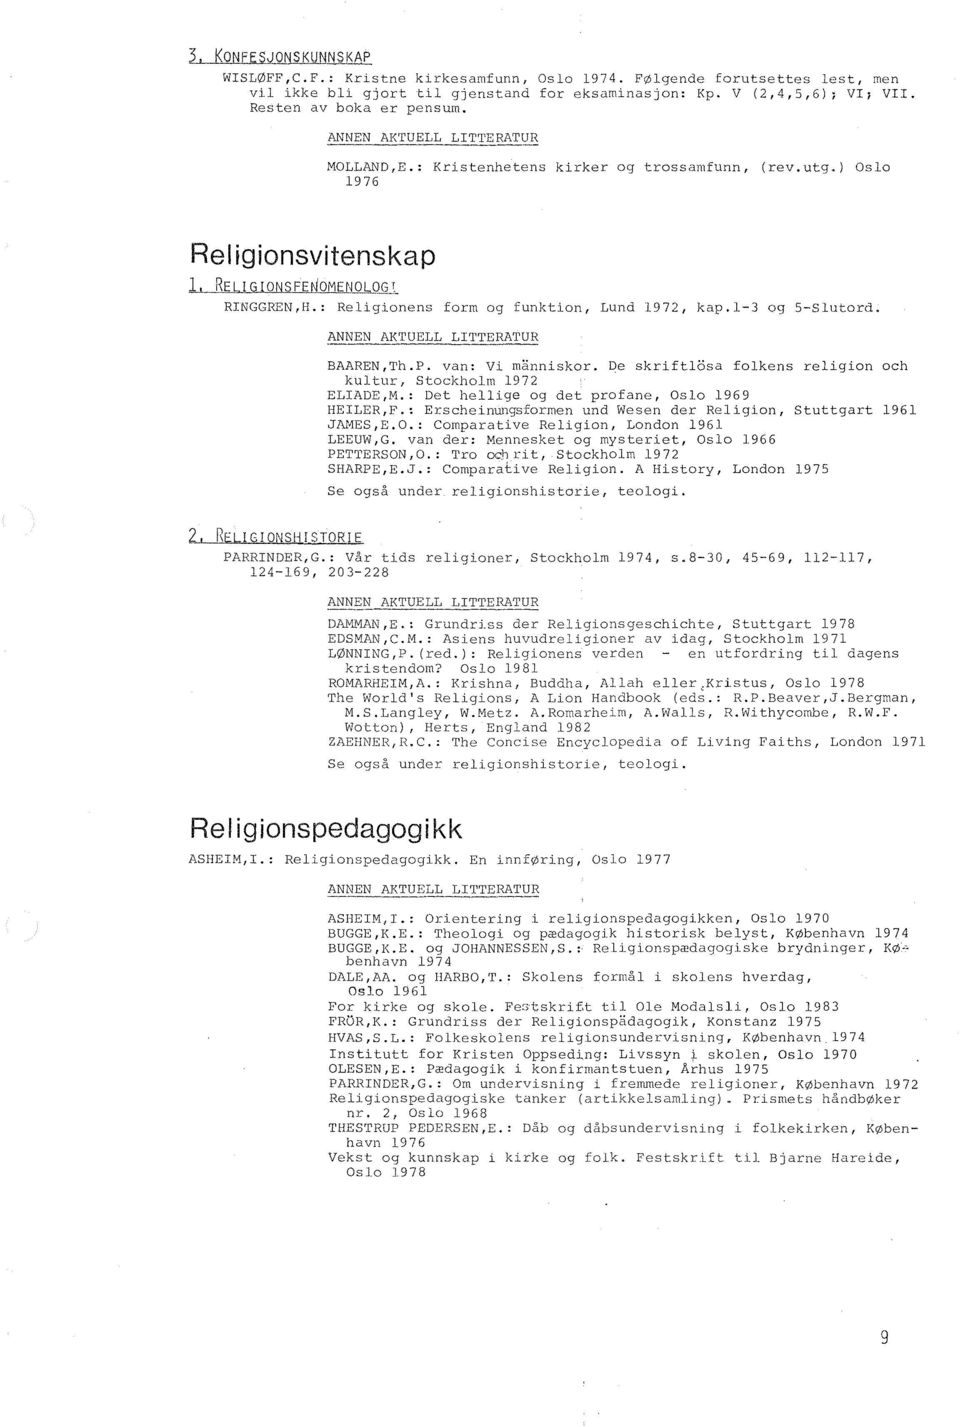 1-3 og 5-S1utord. BAAREN,Th.P. van: Vi manniskor. De skriftlosa folkens religion och kultur, Stockholm 1972 ELIADE,M.: Det hellige og det profane, Oslo 1969 HEII,ER,F.